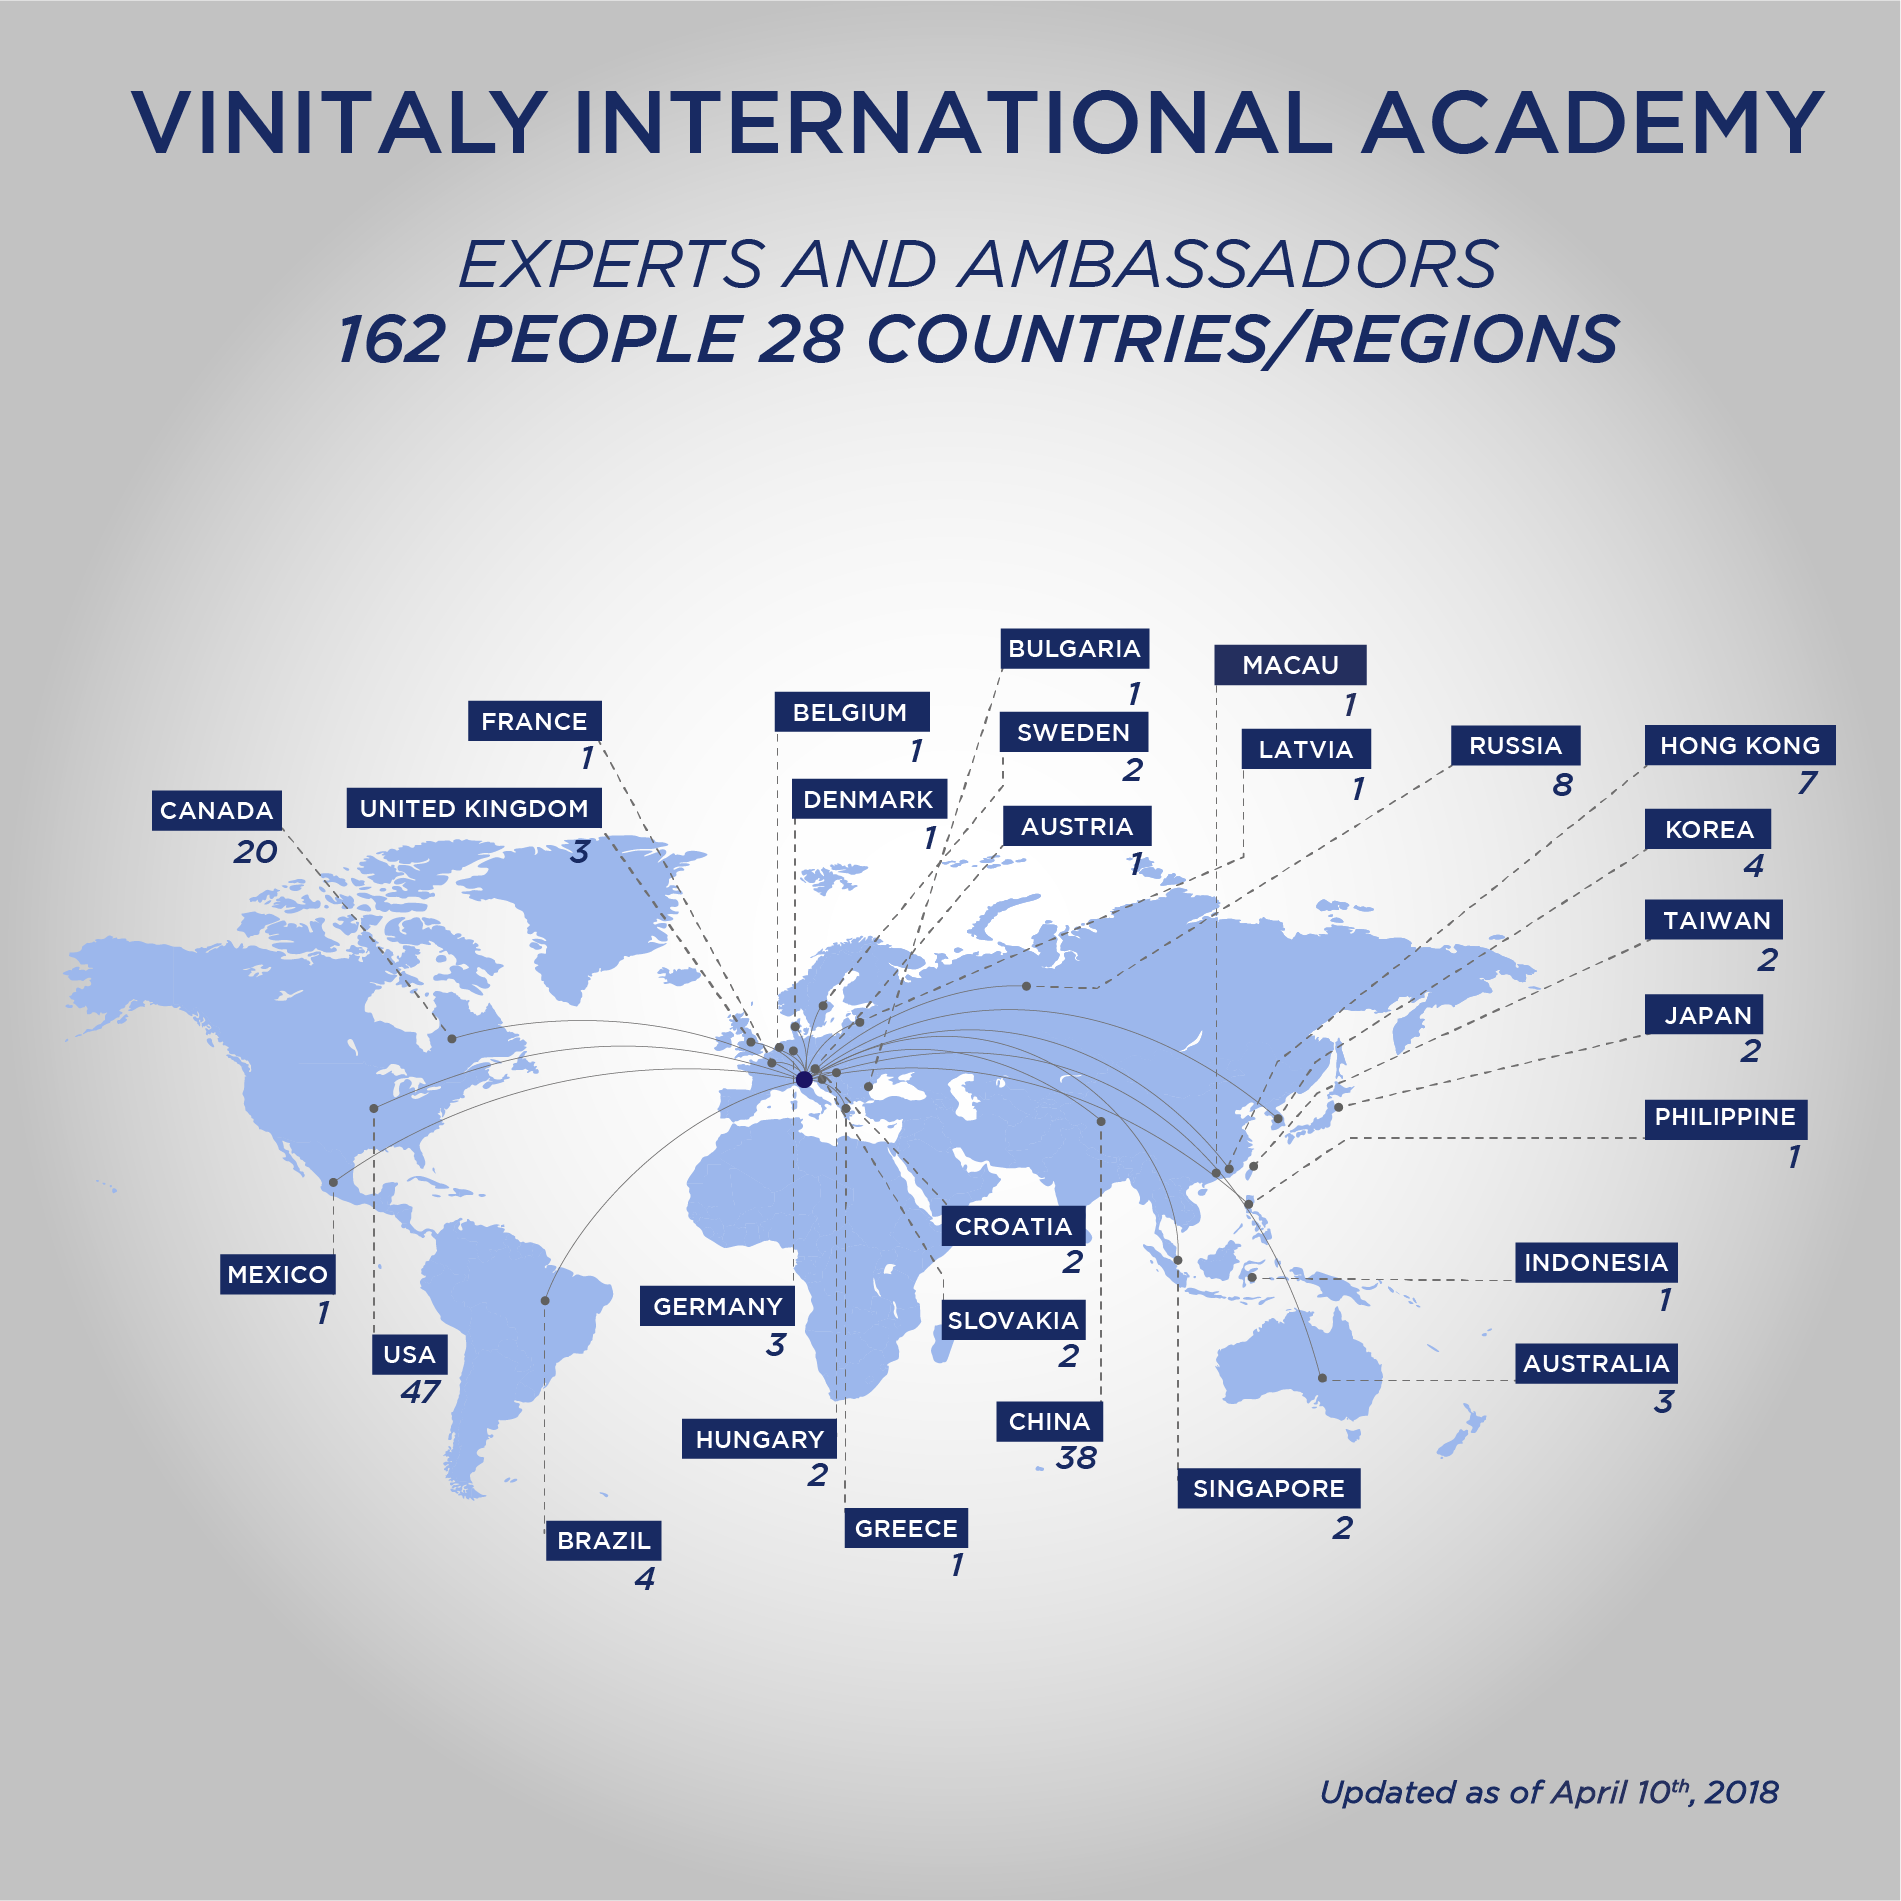 VIA Ambassador and Expert world map